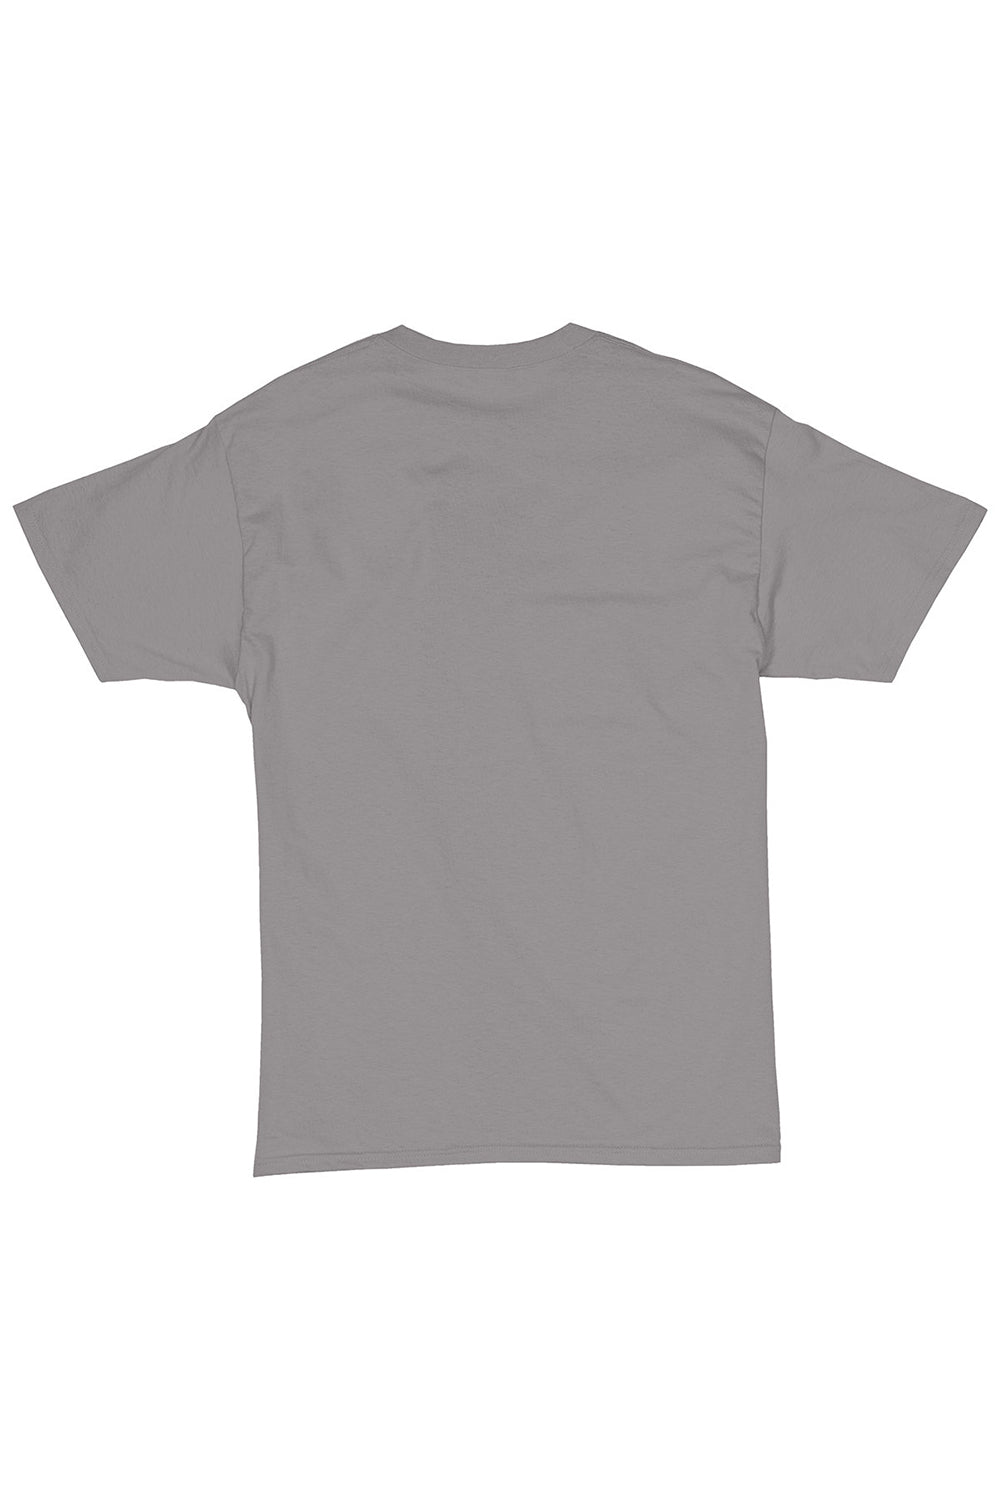 Hanes 5280 Mens ComfortSoft Short Sleeve Crewneck T-Shirt Graphite Grey Flat Back